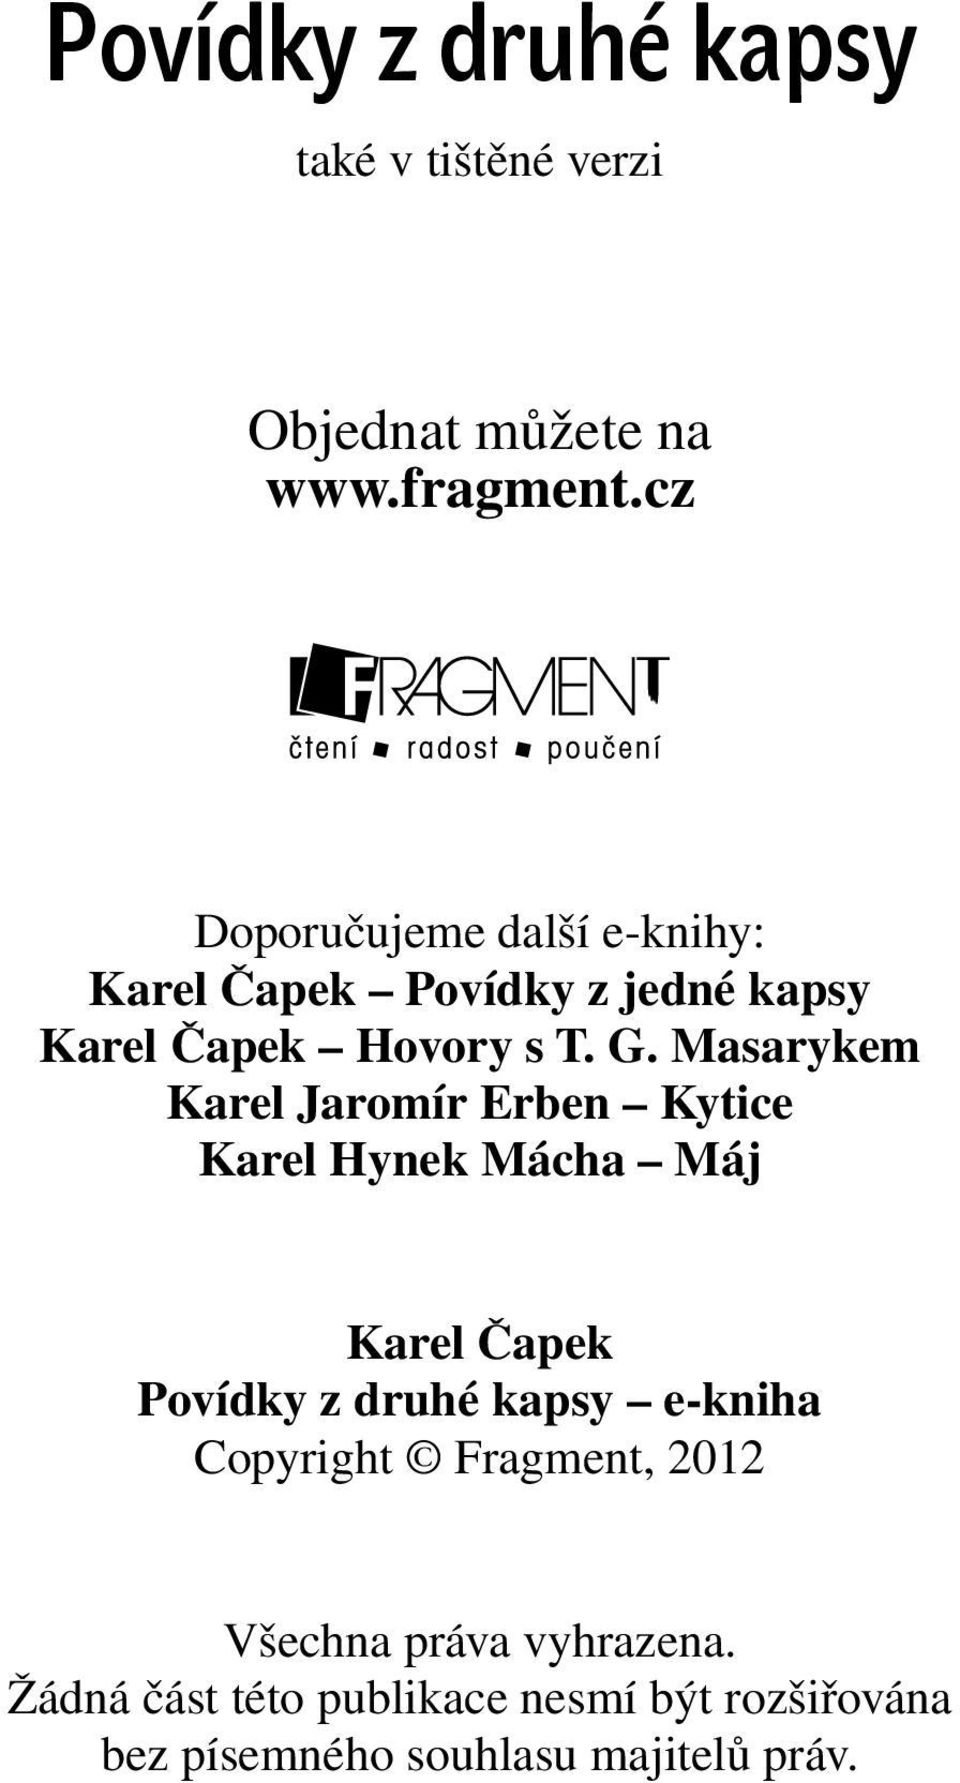 Masarykem Karel Jaromír Erben Kytice Karel Hynek Mácha Máj Karel Čapek Povídky z druhé kapsy e-kniha